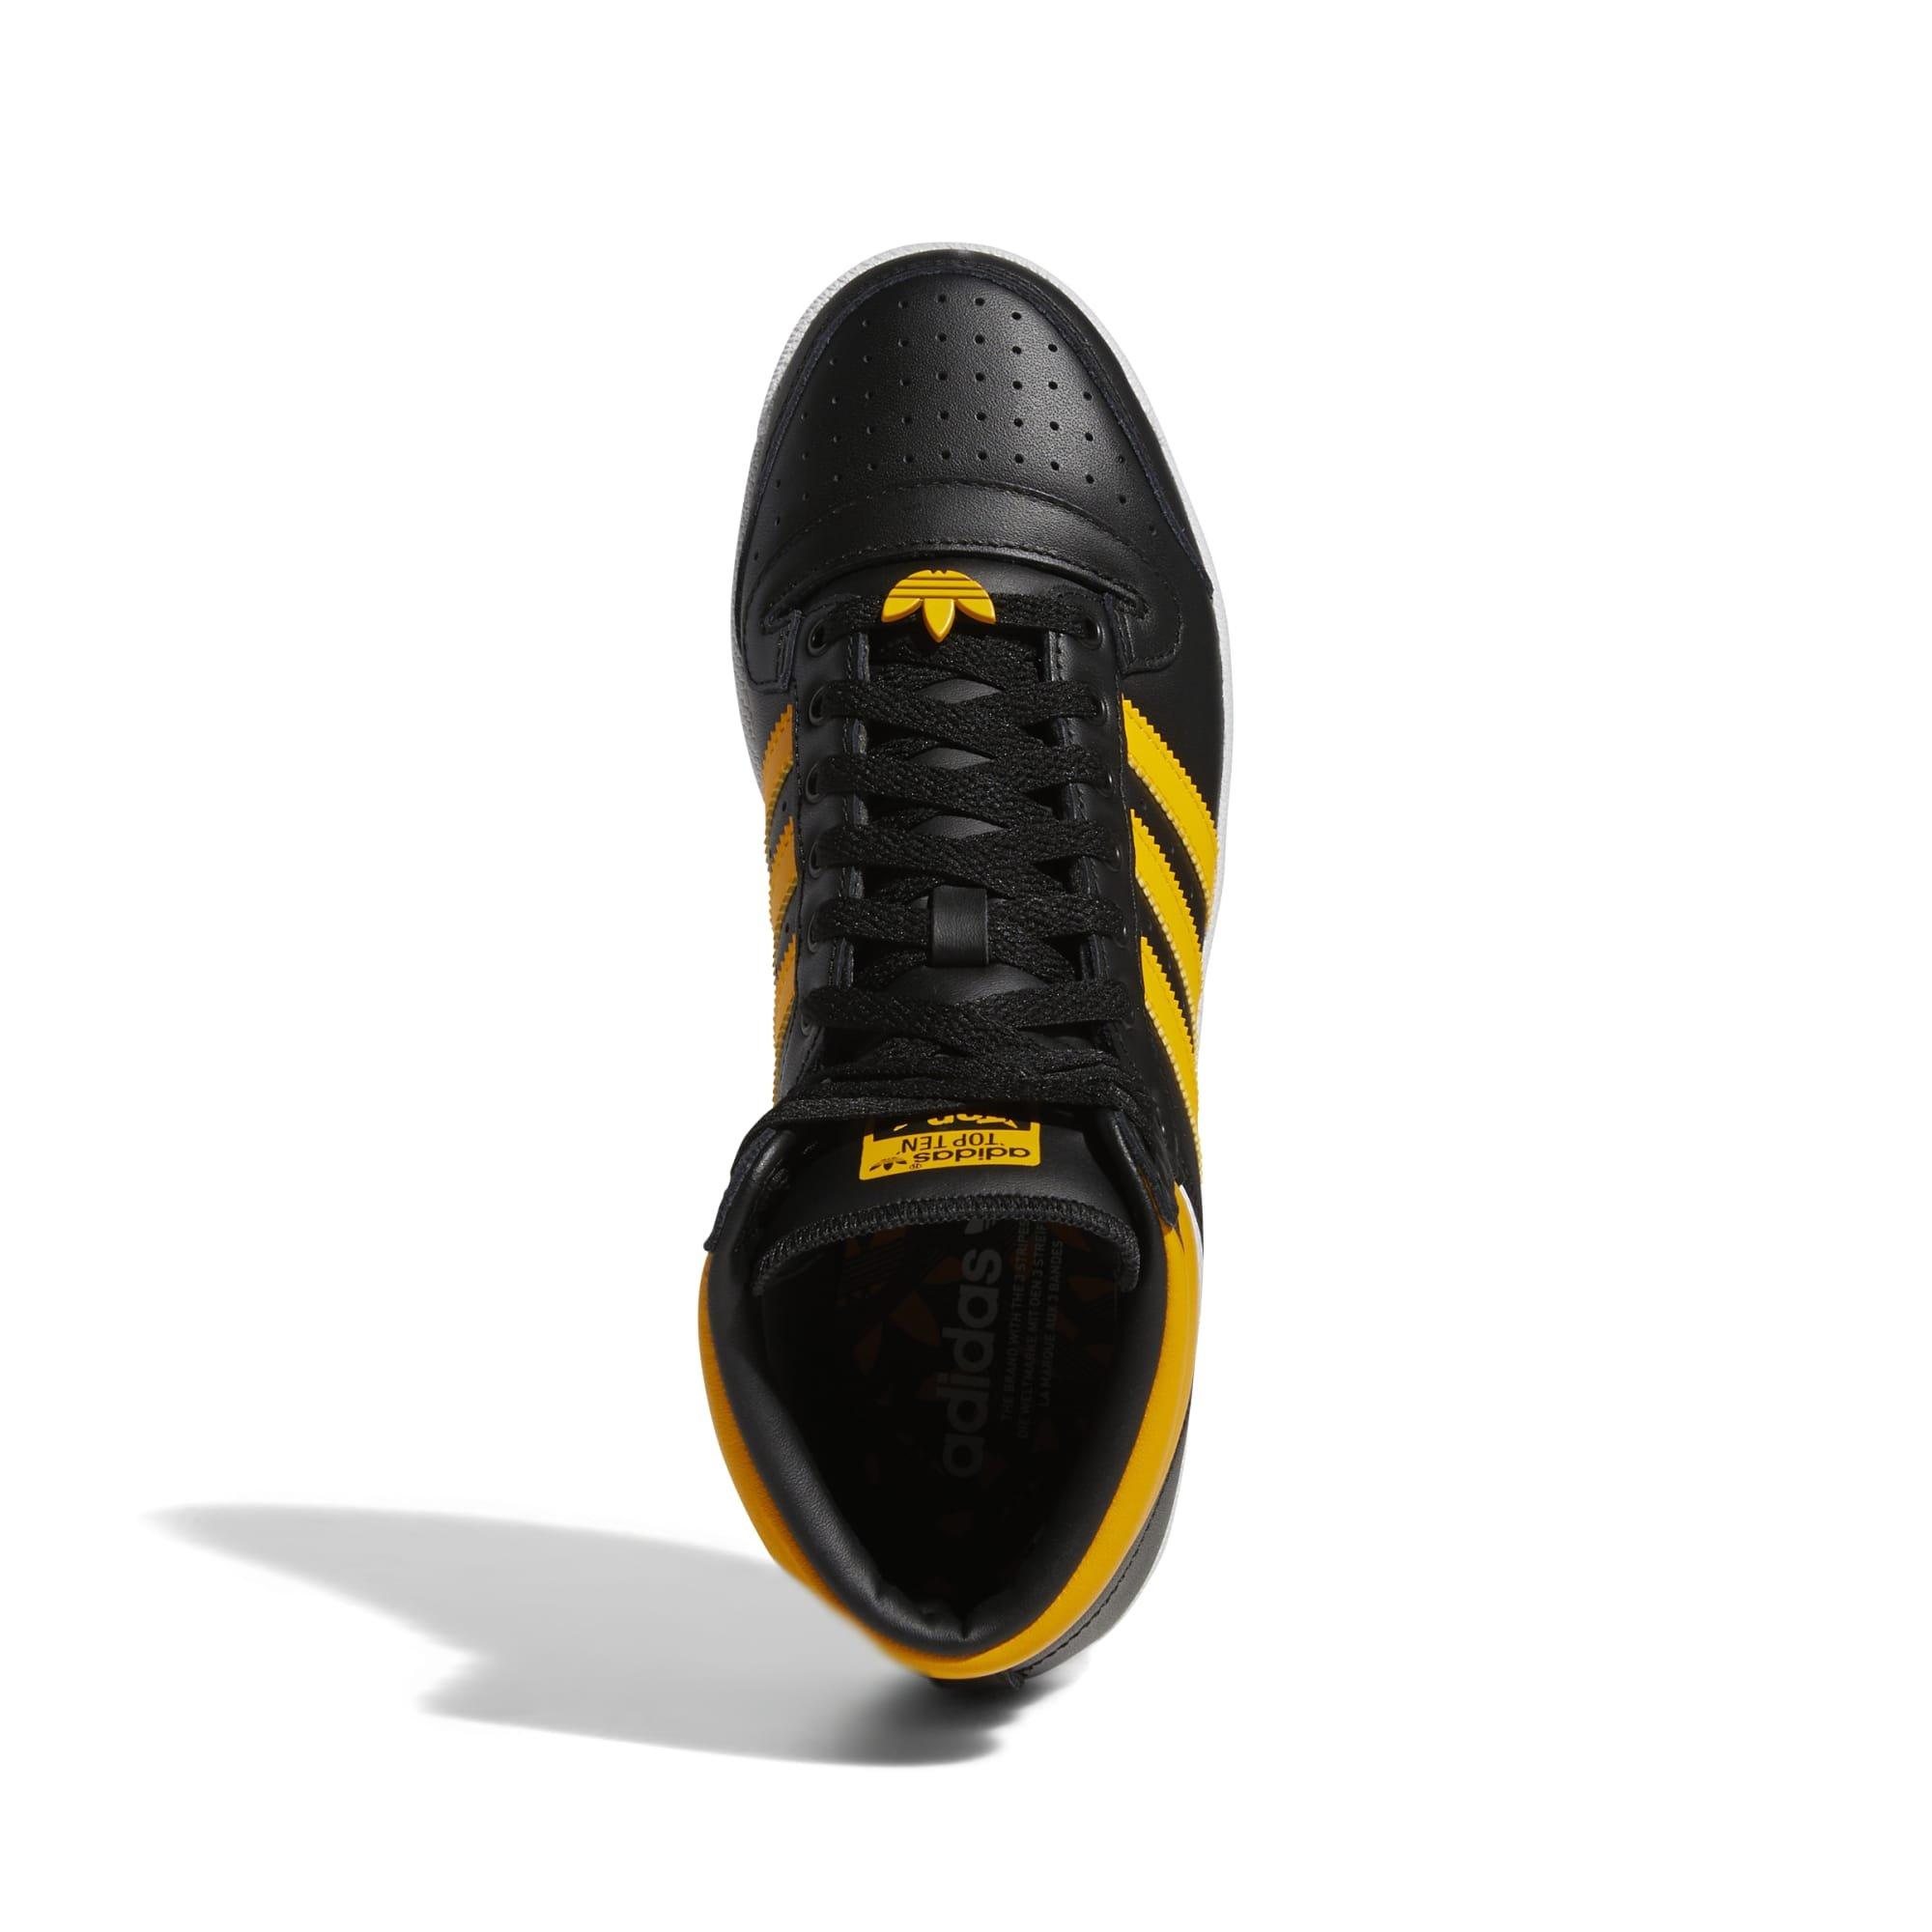 adidas Top Hi "Black/Gold" Men's Shoe